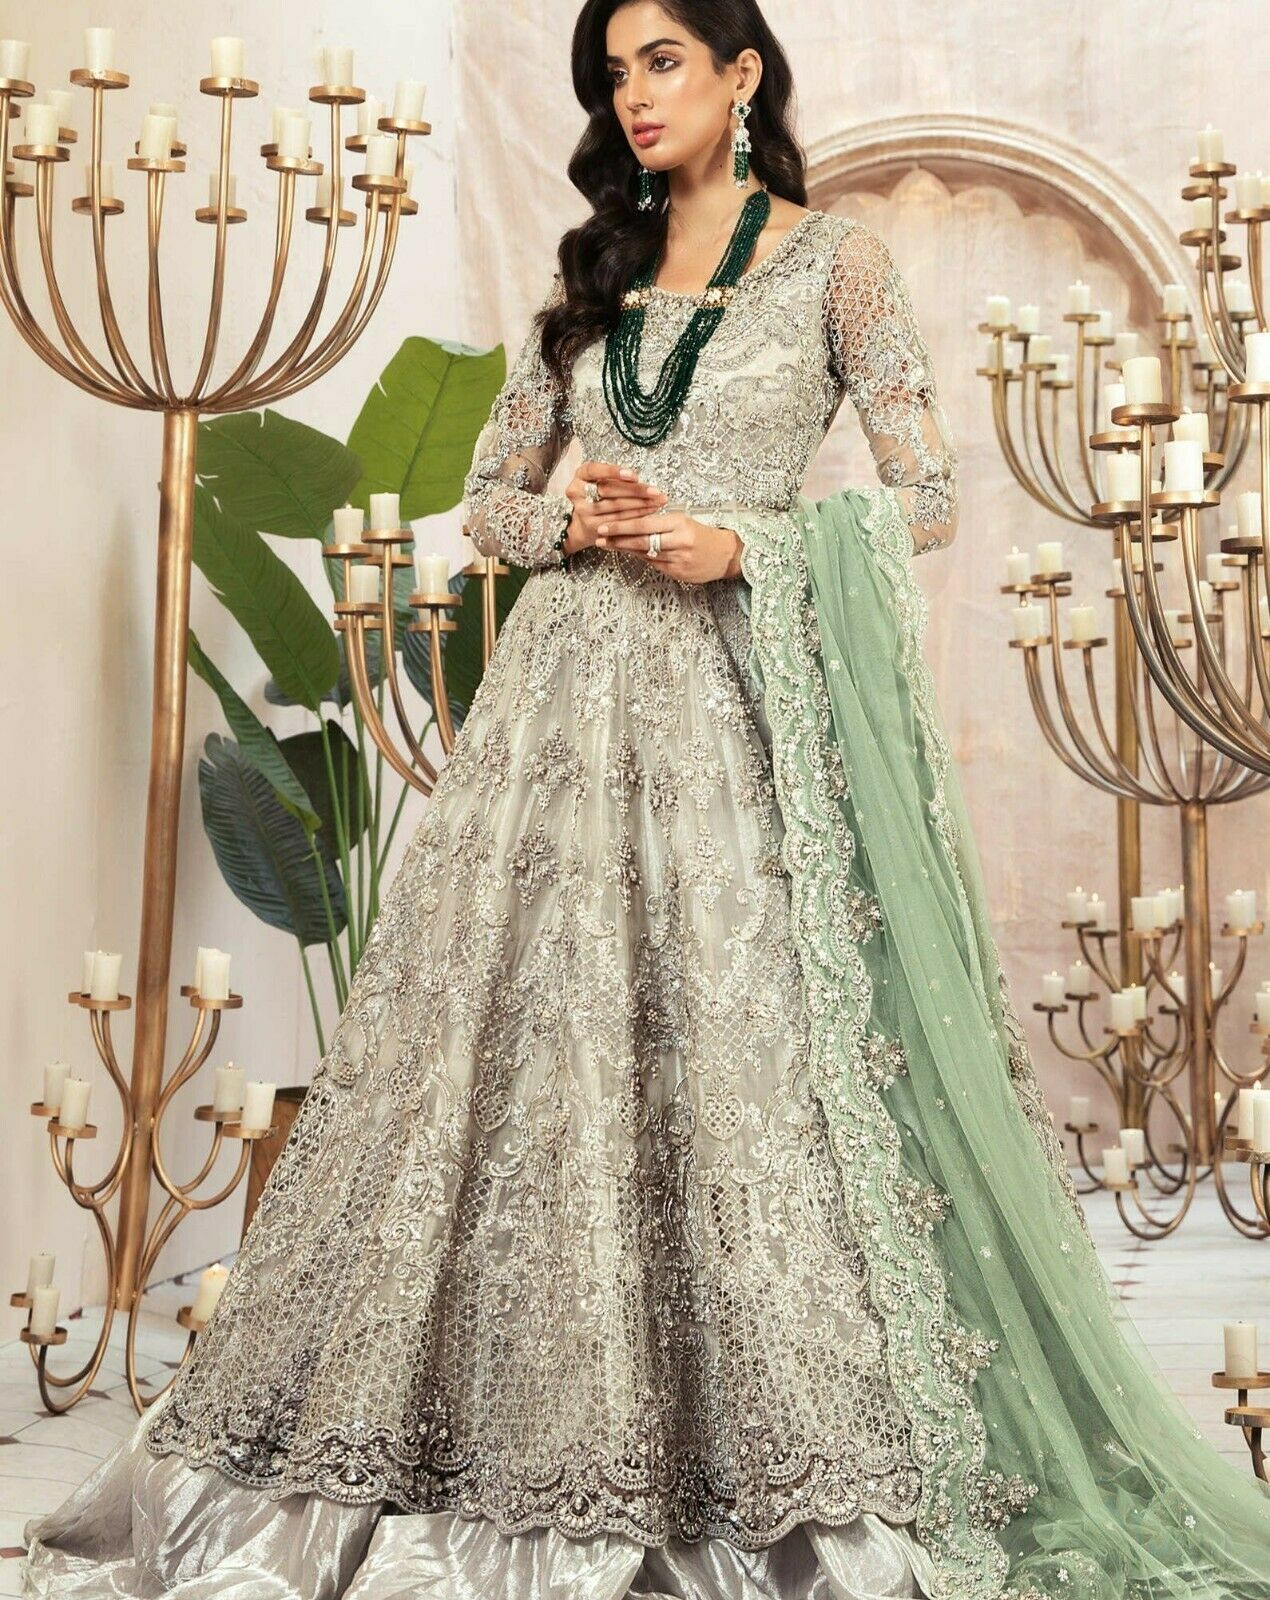 Maria B. Bridal Couture - Top Pakistani Indian Designer Mint Gray Dress Lehnga